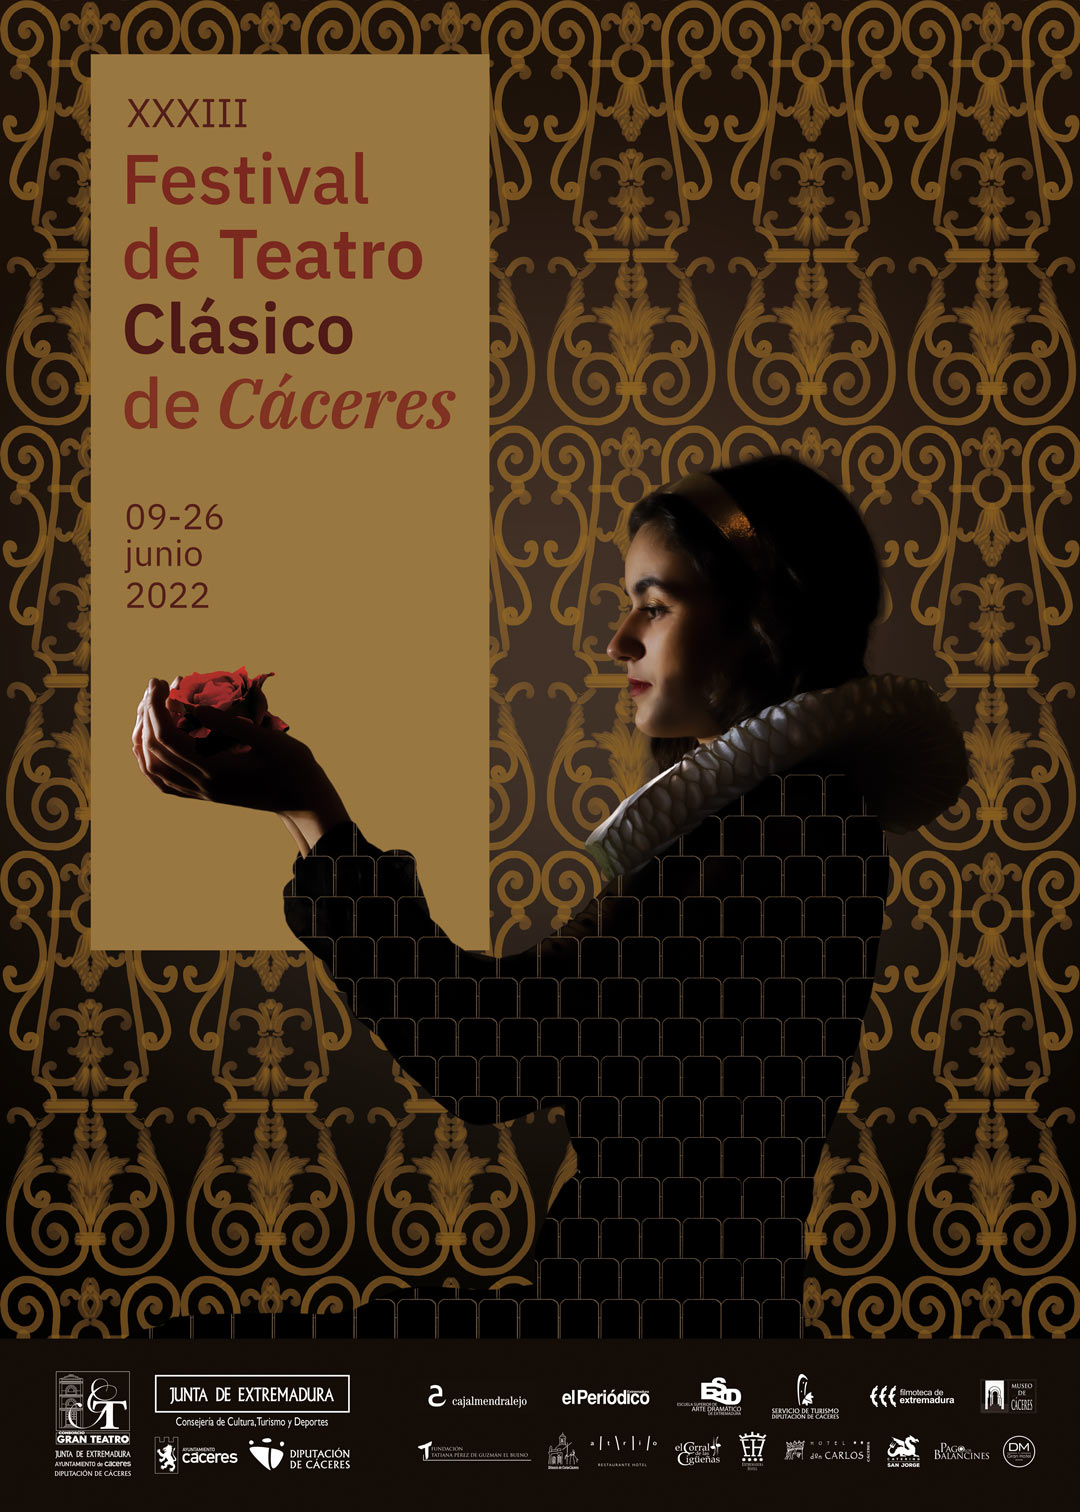 XXXIII Festival de Teatro Clásico de Cáceres